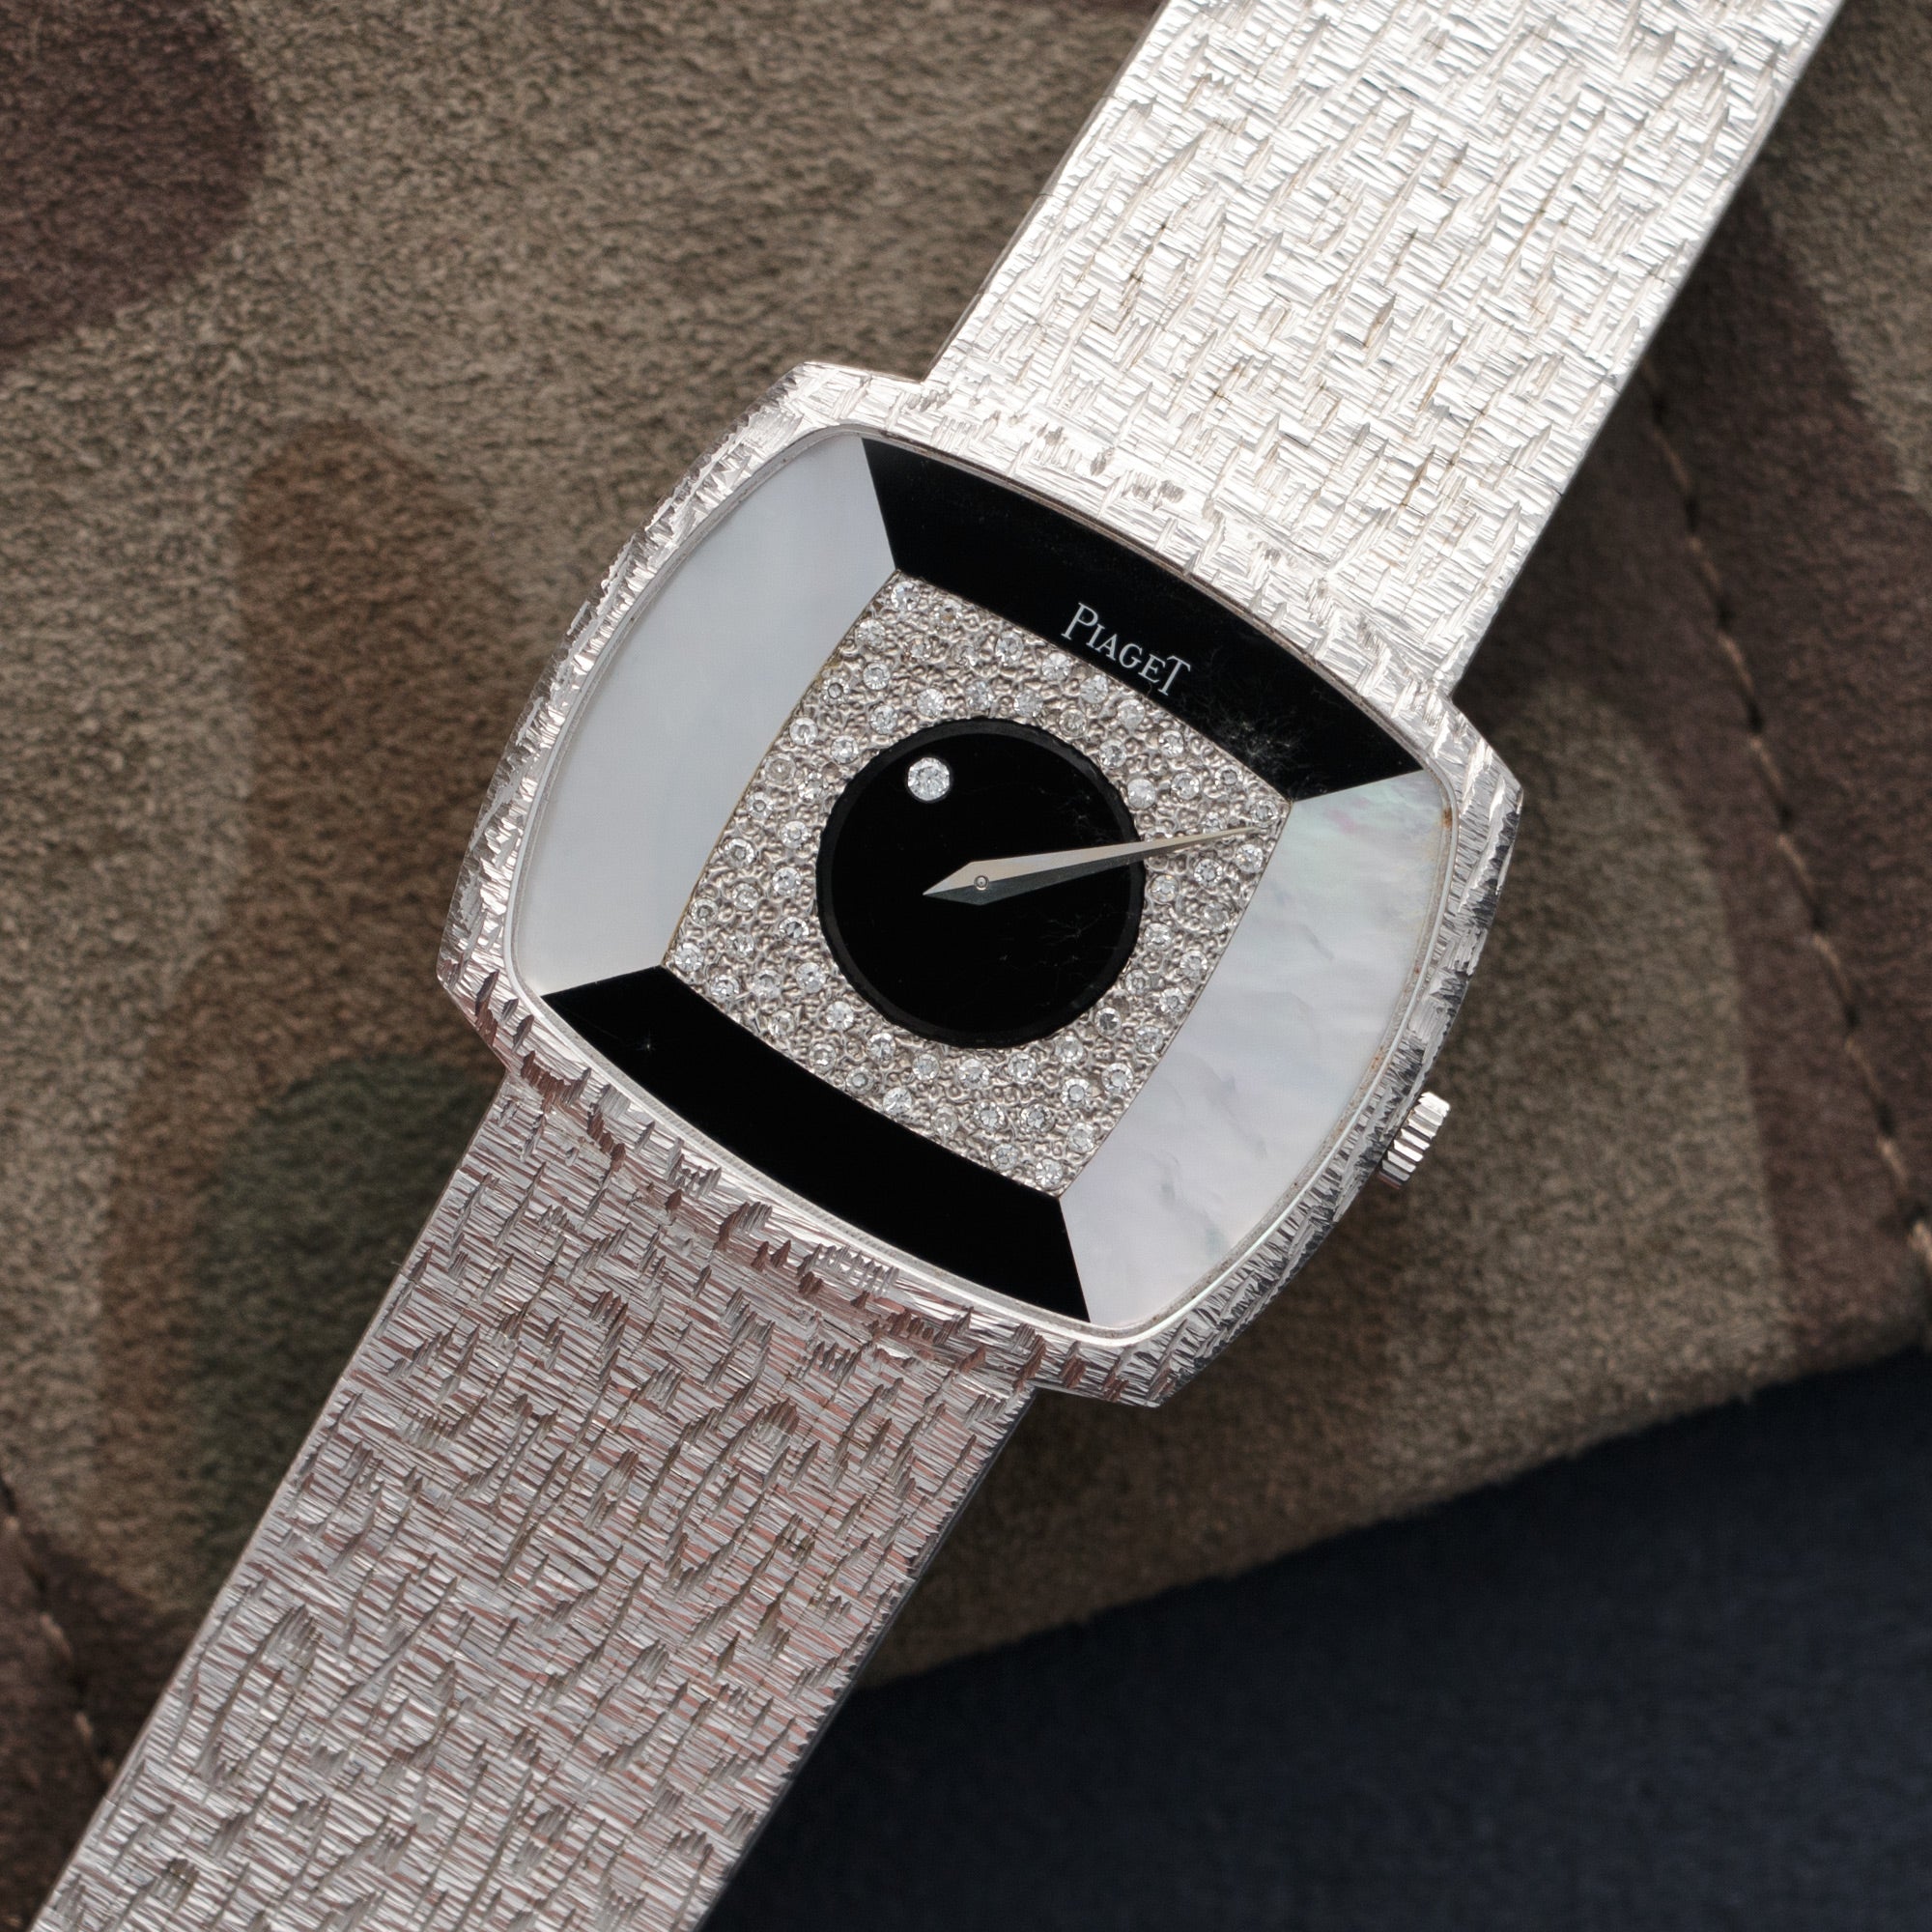 Piaget - Piaget White Gold Mystery Diamond Watch - The Keystone Watches